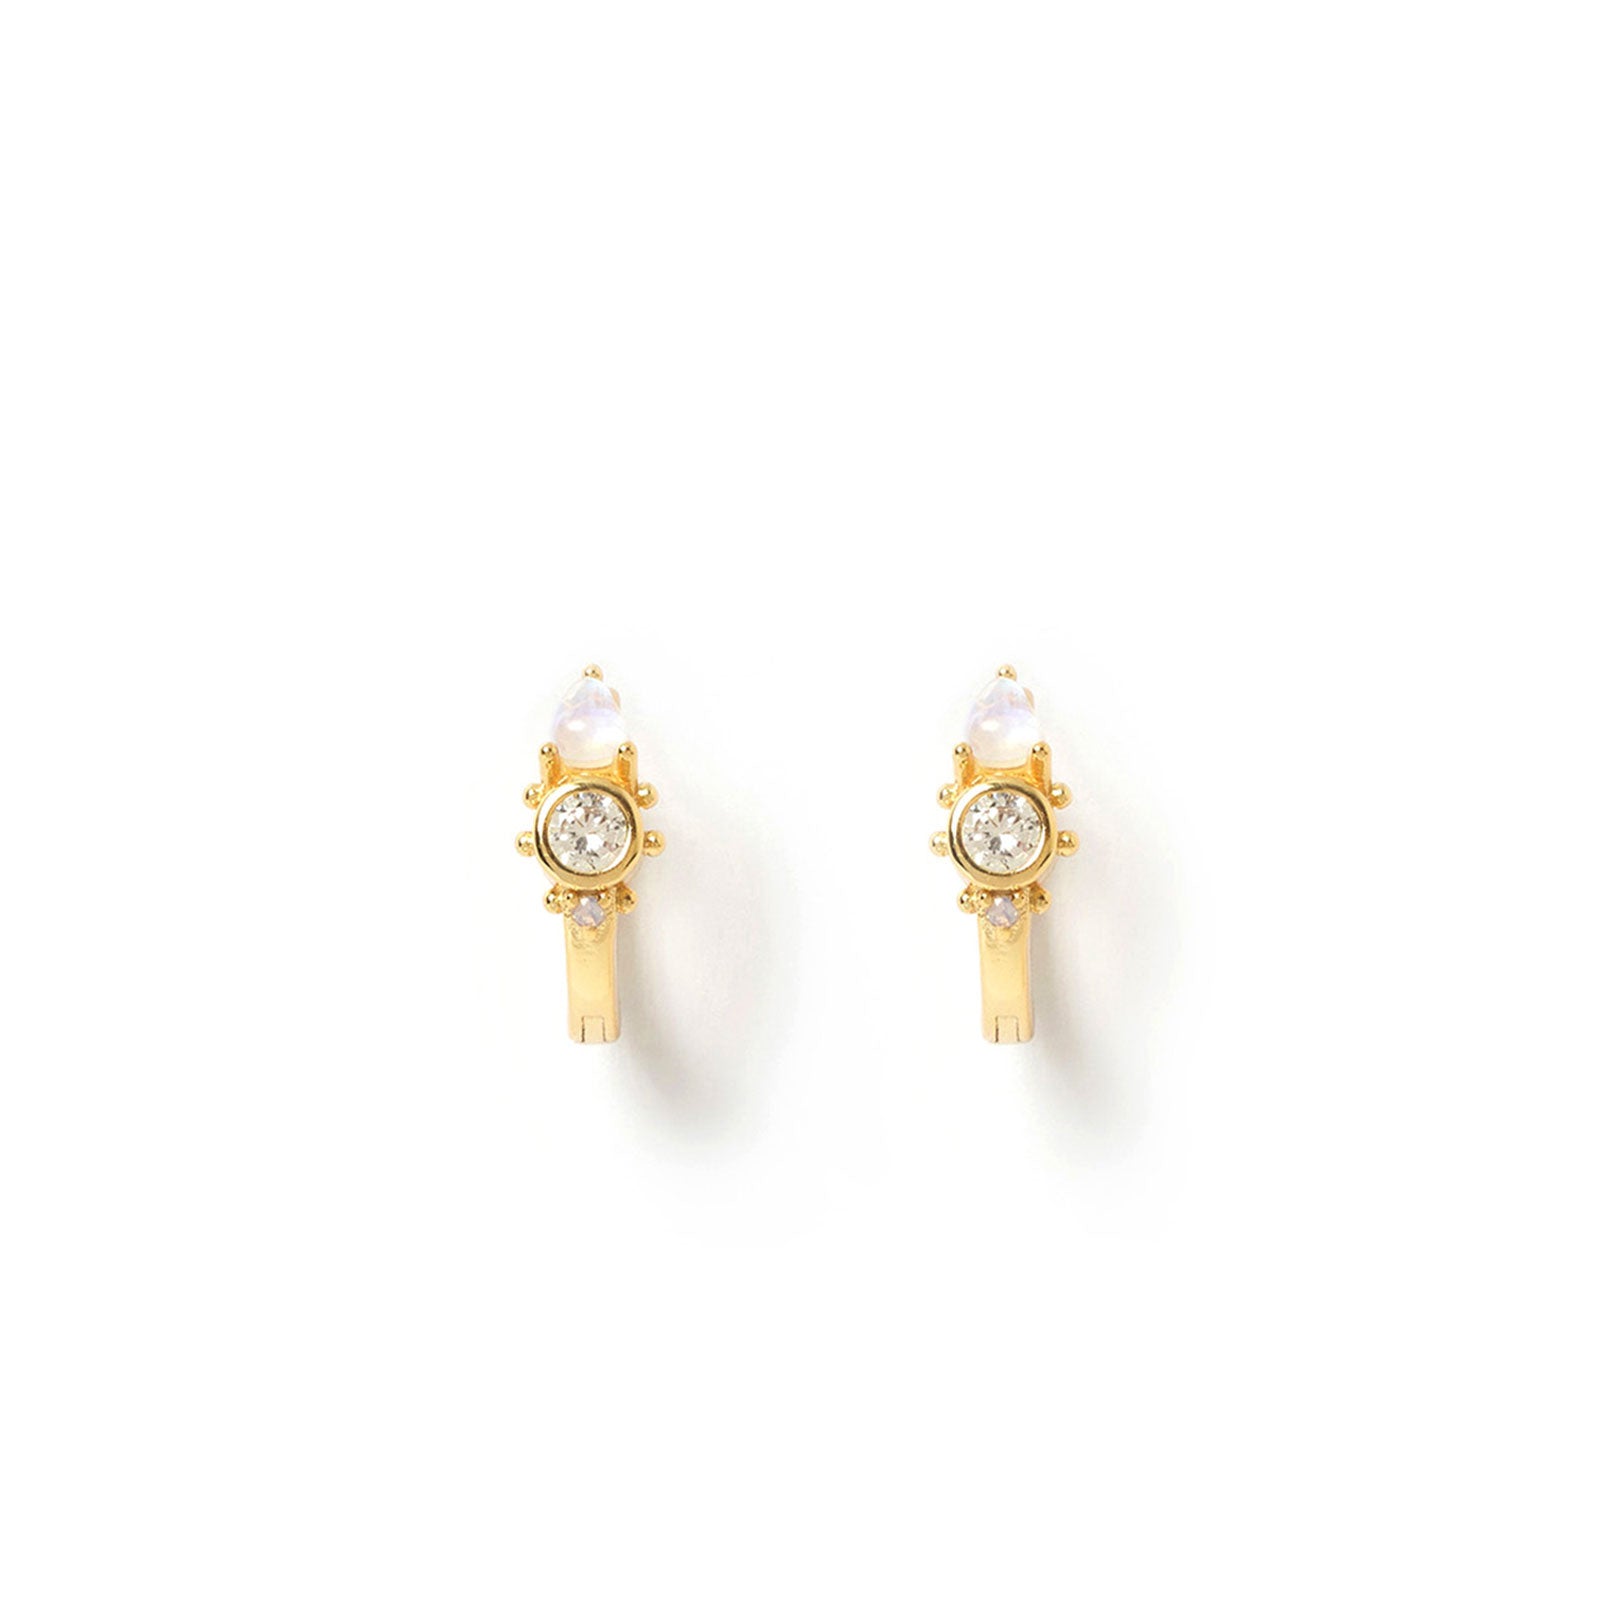 Santino Stone and Gold Huggie Earrings